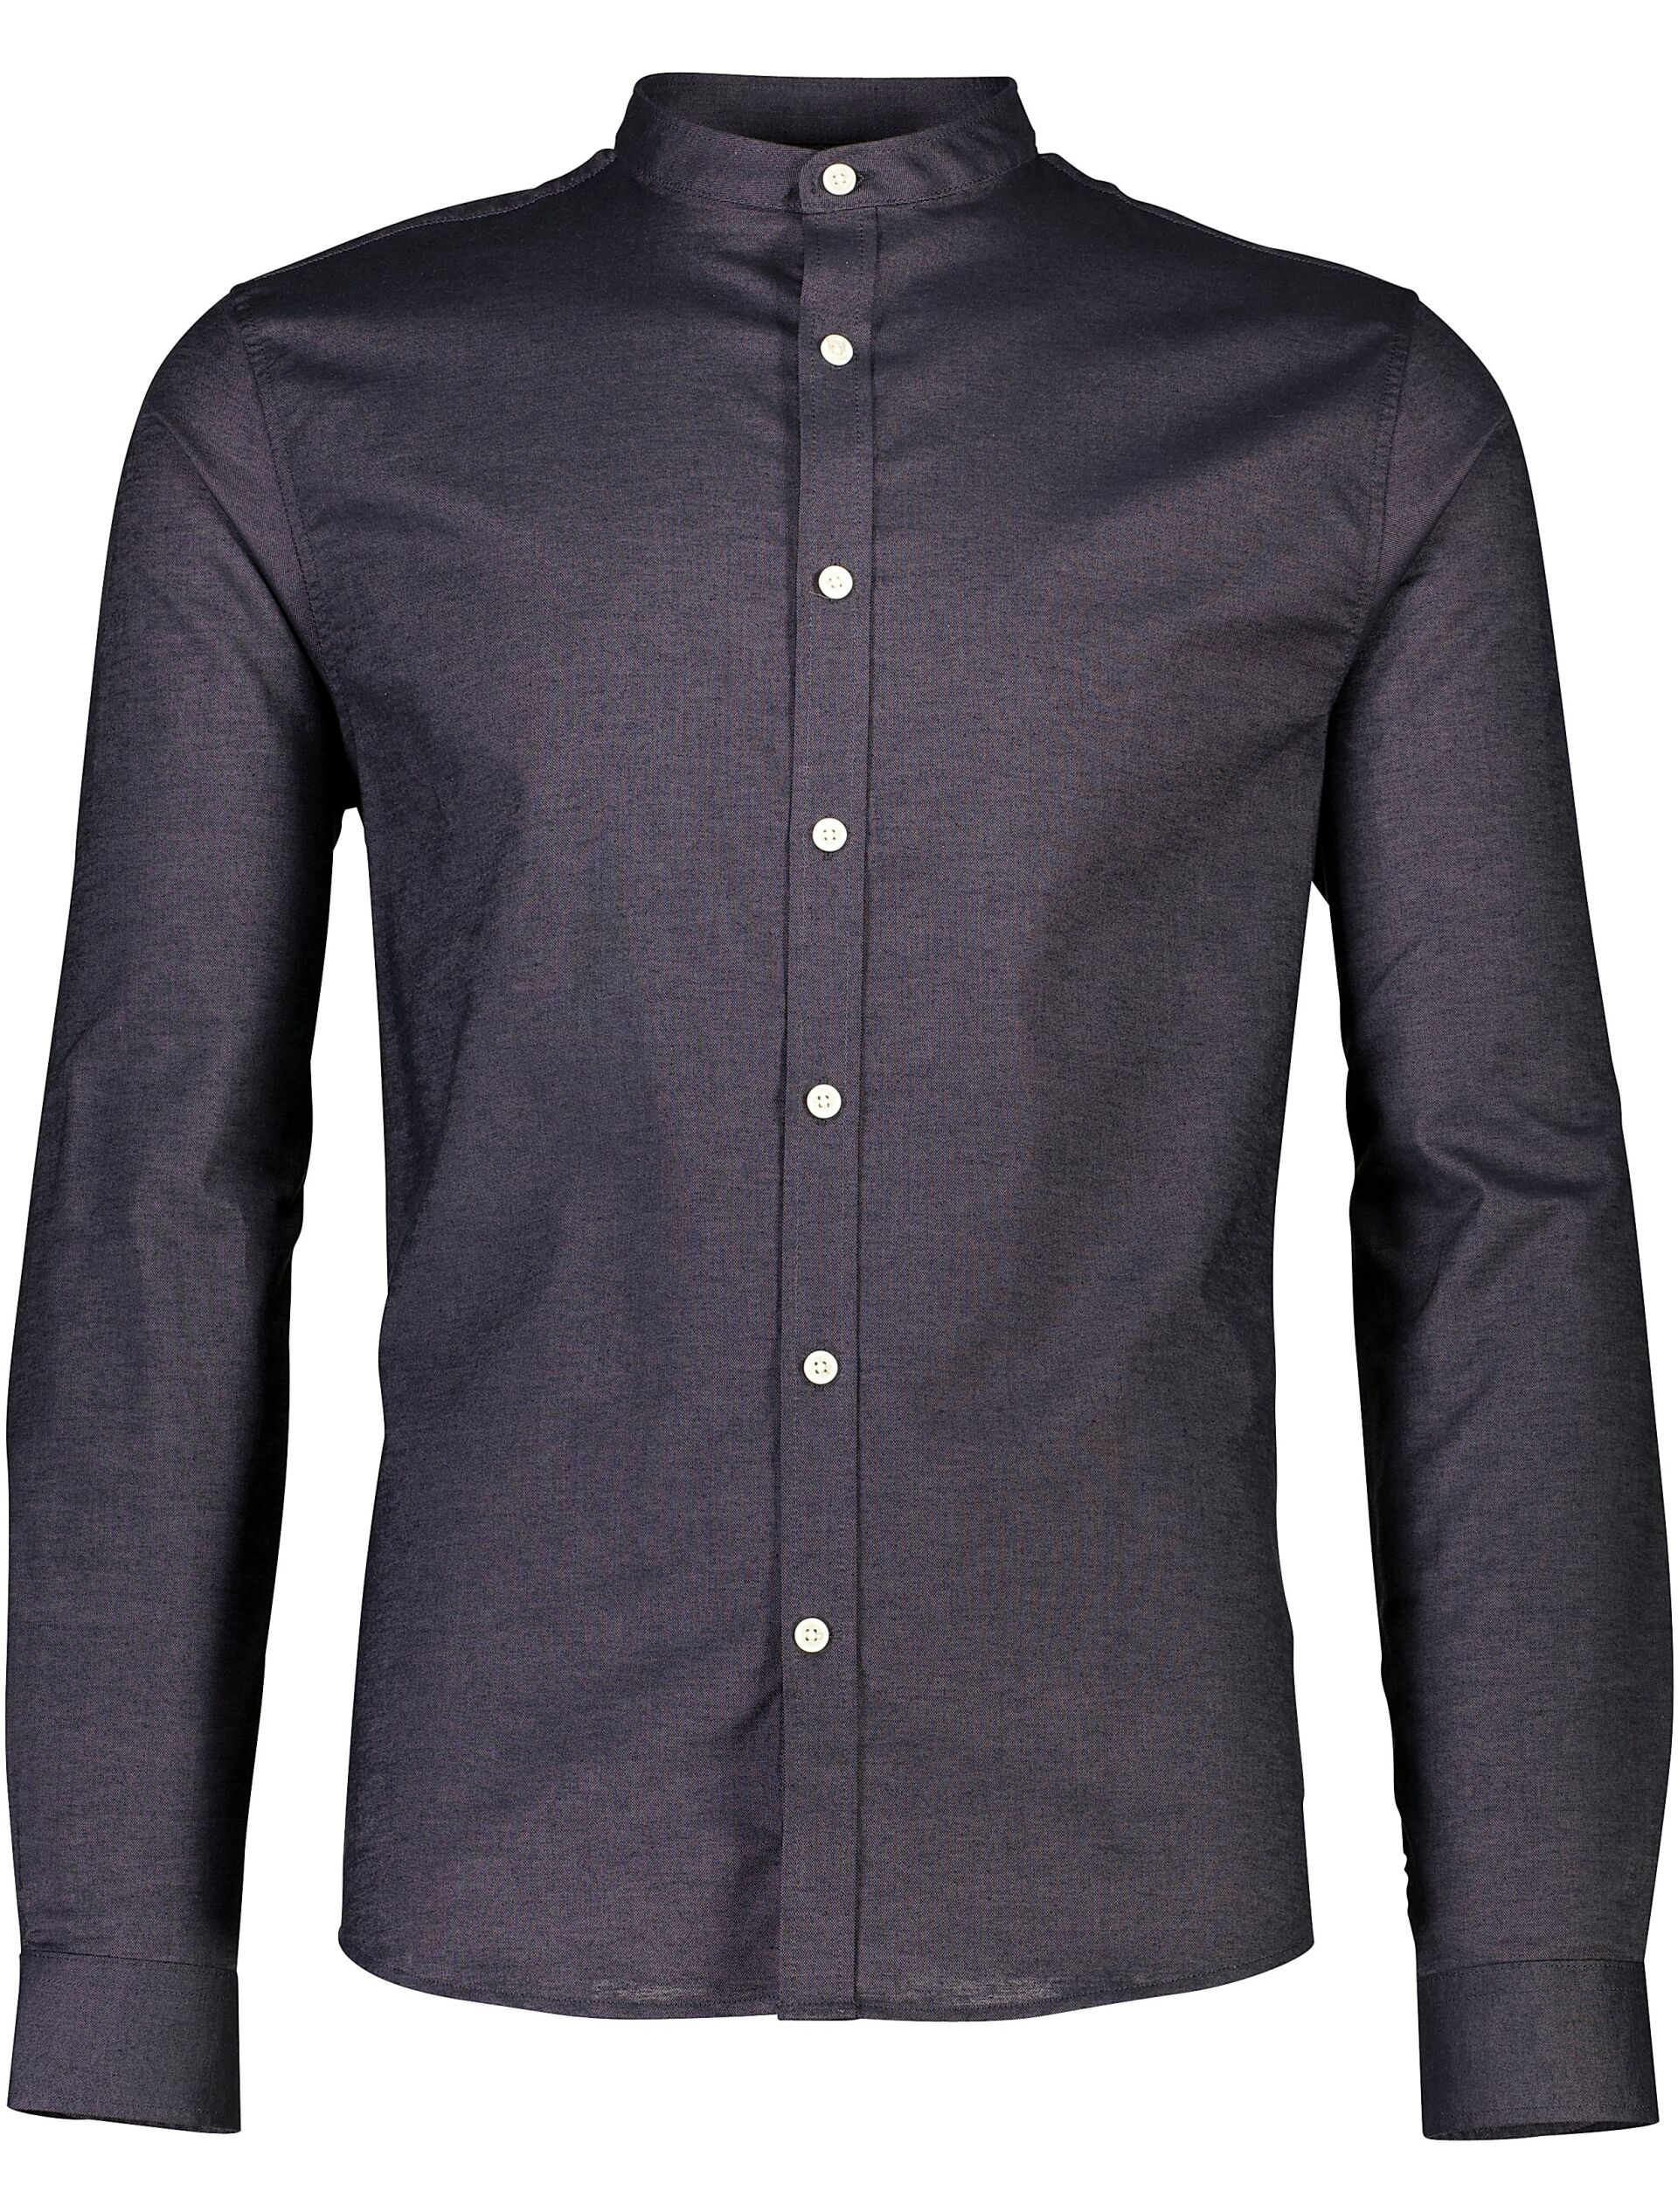 Oxford shirt Oxford shirt Grey 30-203174A